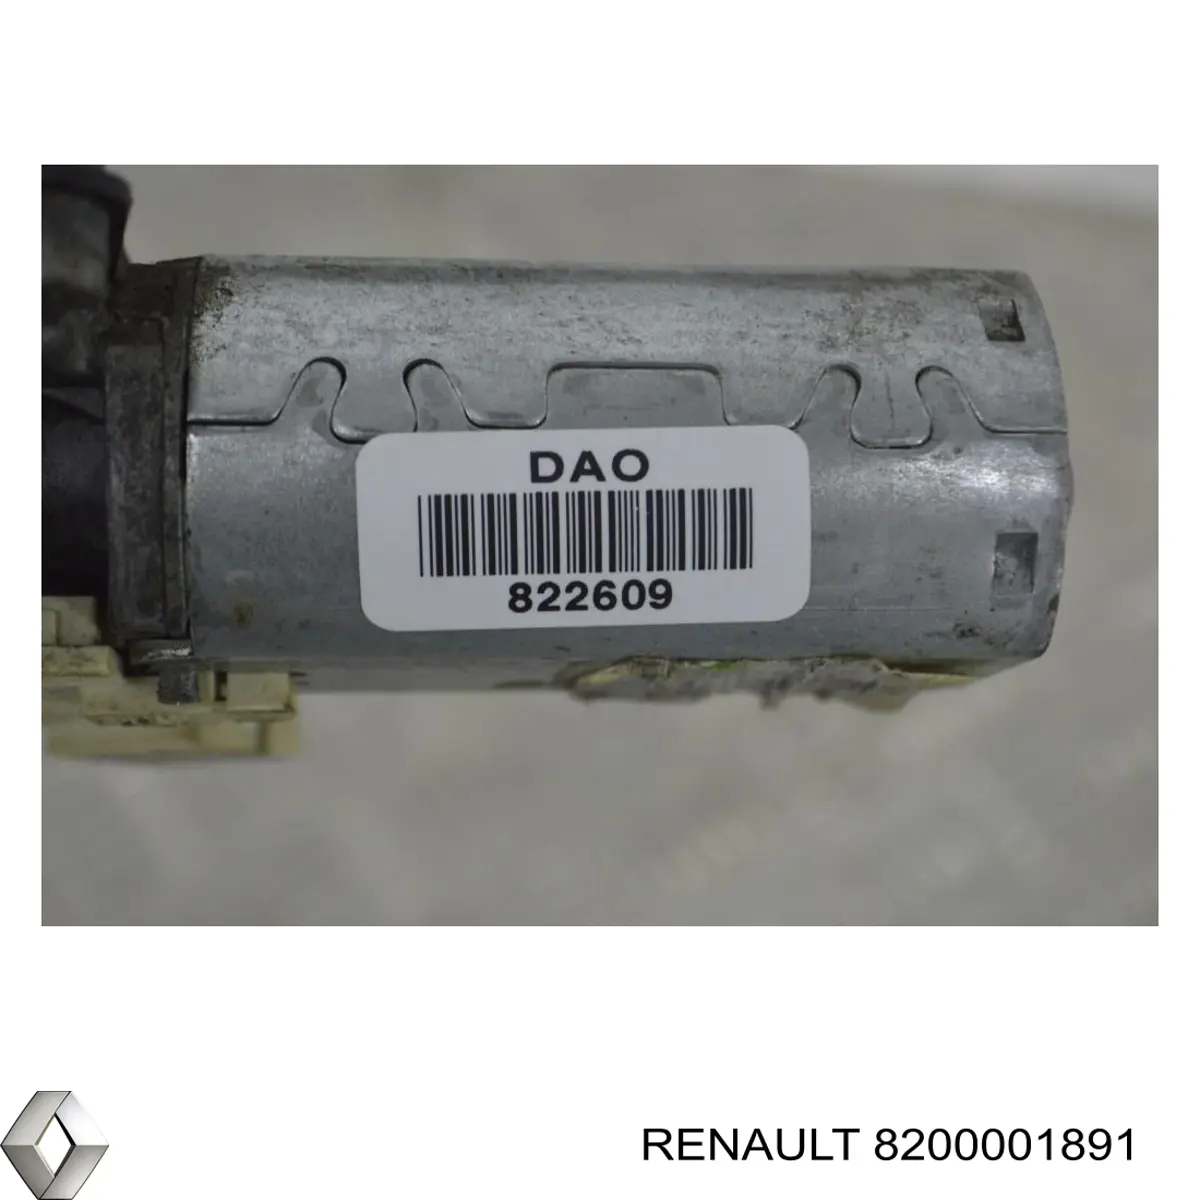 8200001891 Renault (RVI) motor limpiaparabrisas, trasera